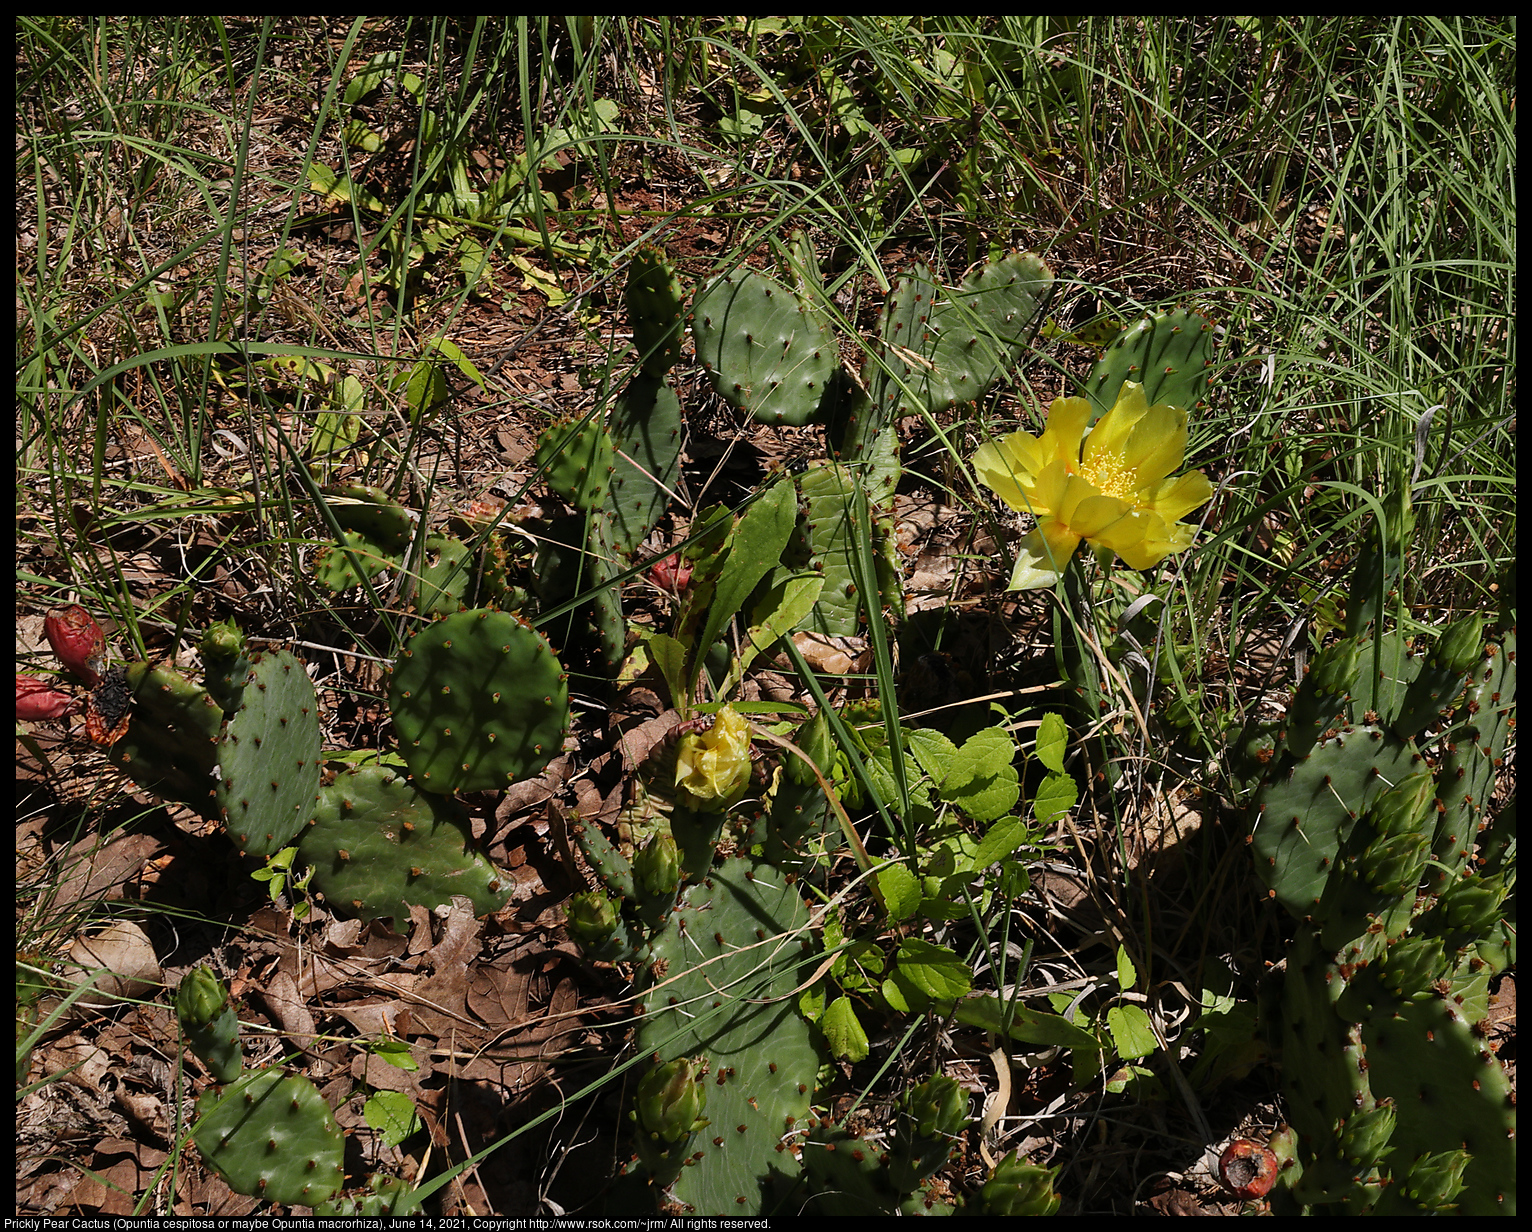 Prickly Pear Cactus (Opuntia cespitosa or maybe Opuntia macrorhiza), June 14, 2021